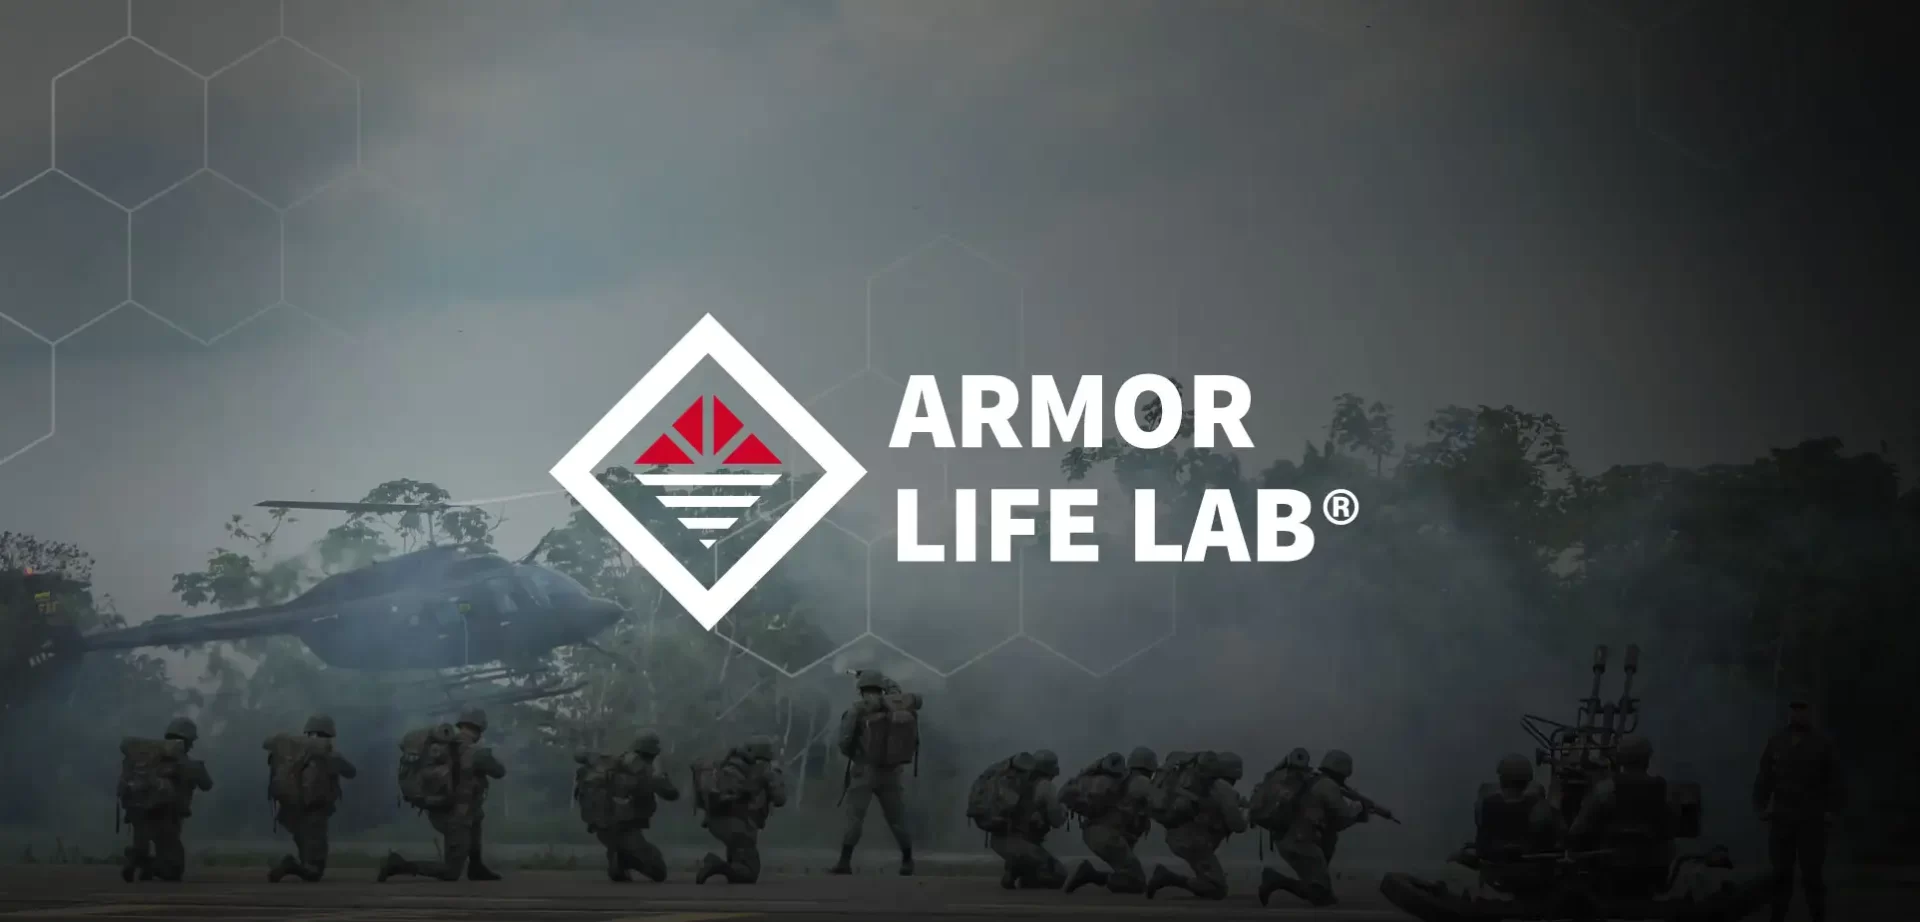 Armor Life Lab